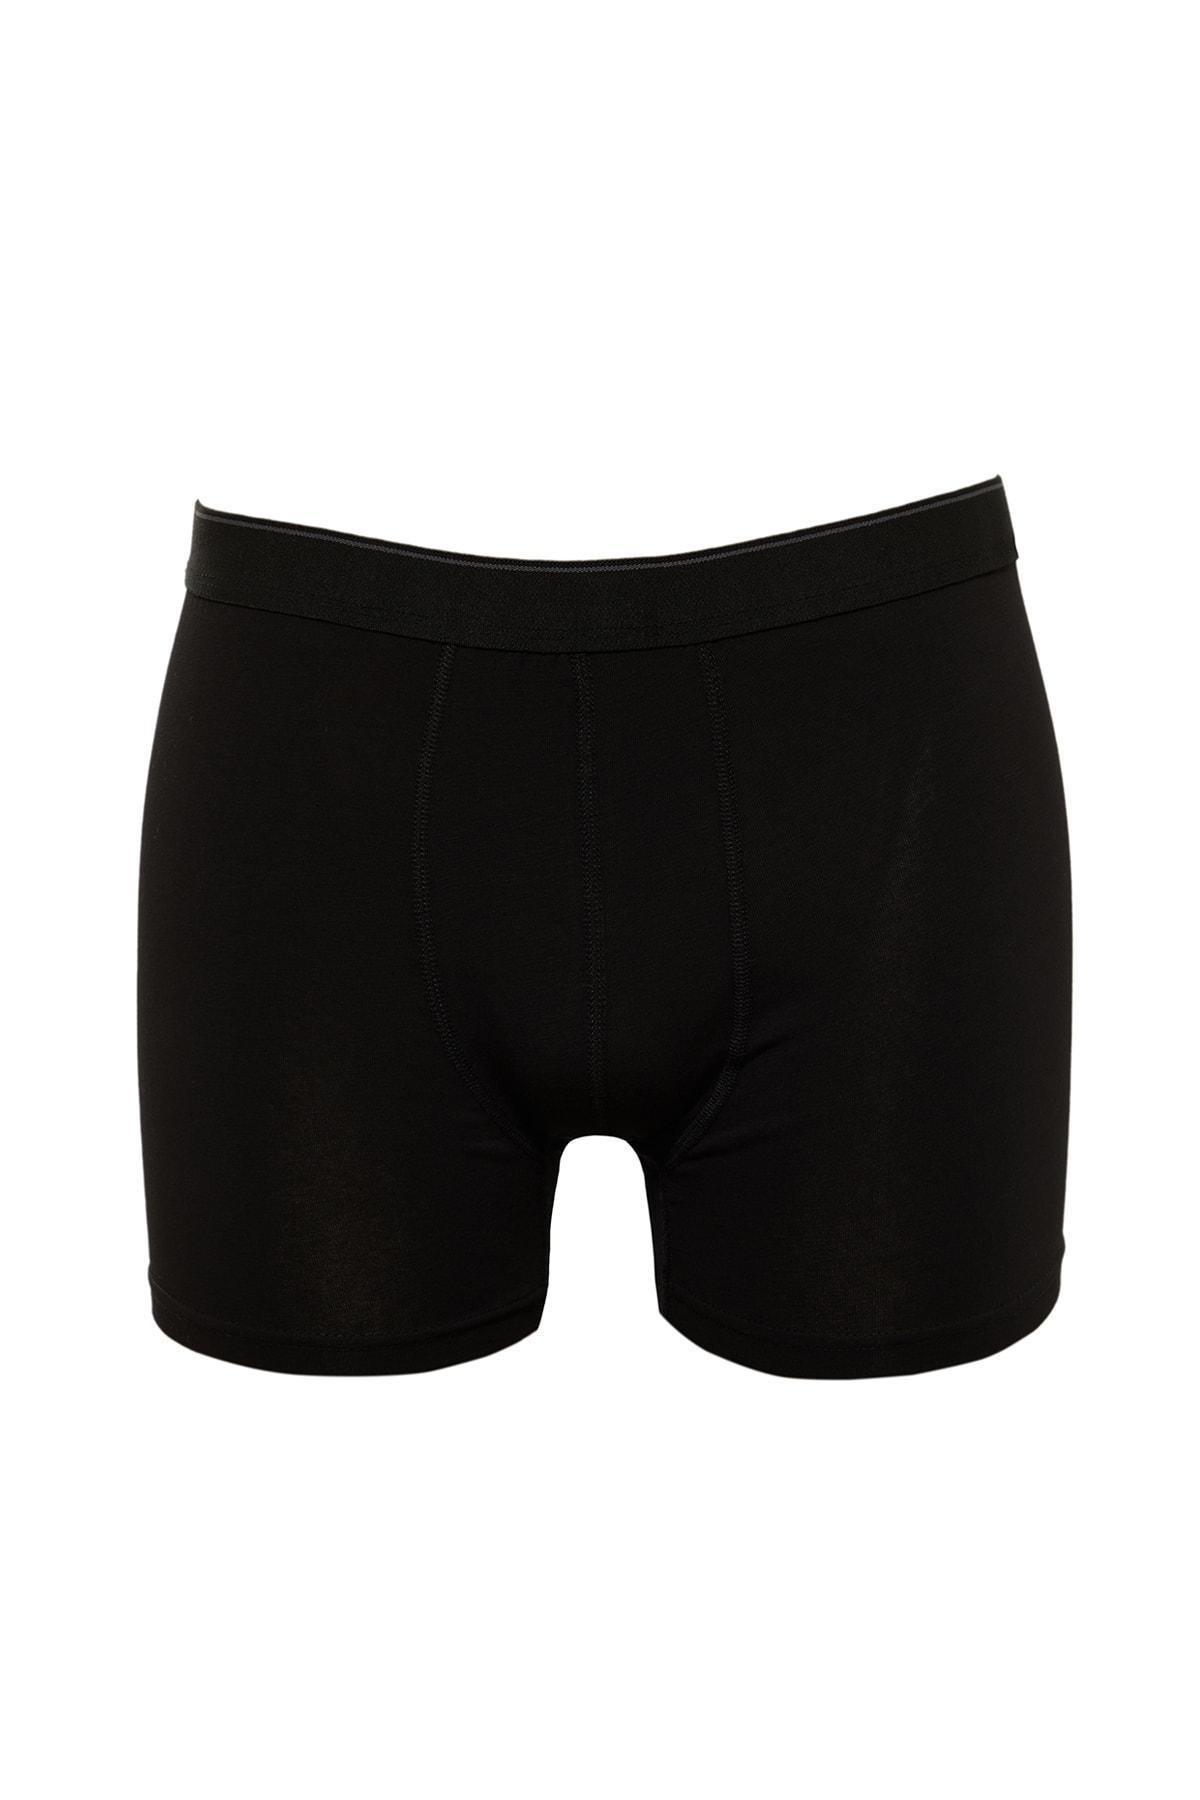 Trendyol - Black Mid-Waist Boxer Shorts, Set Of 3